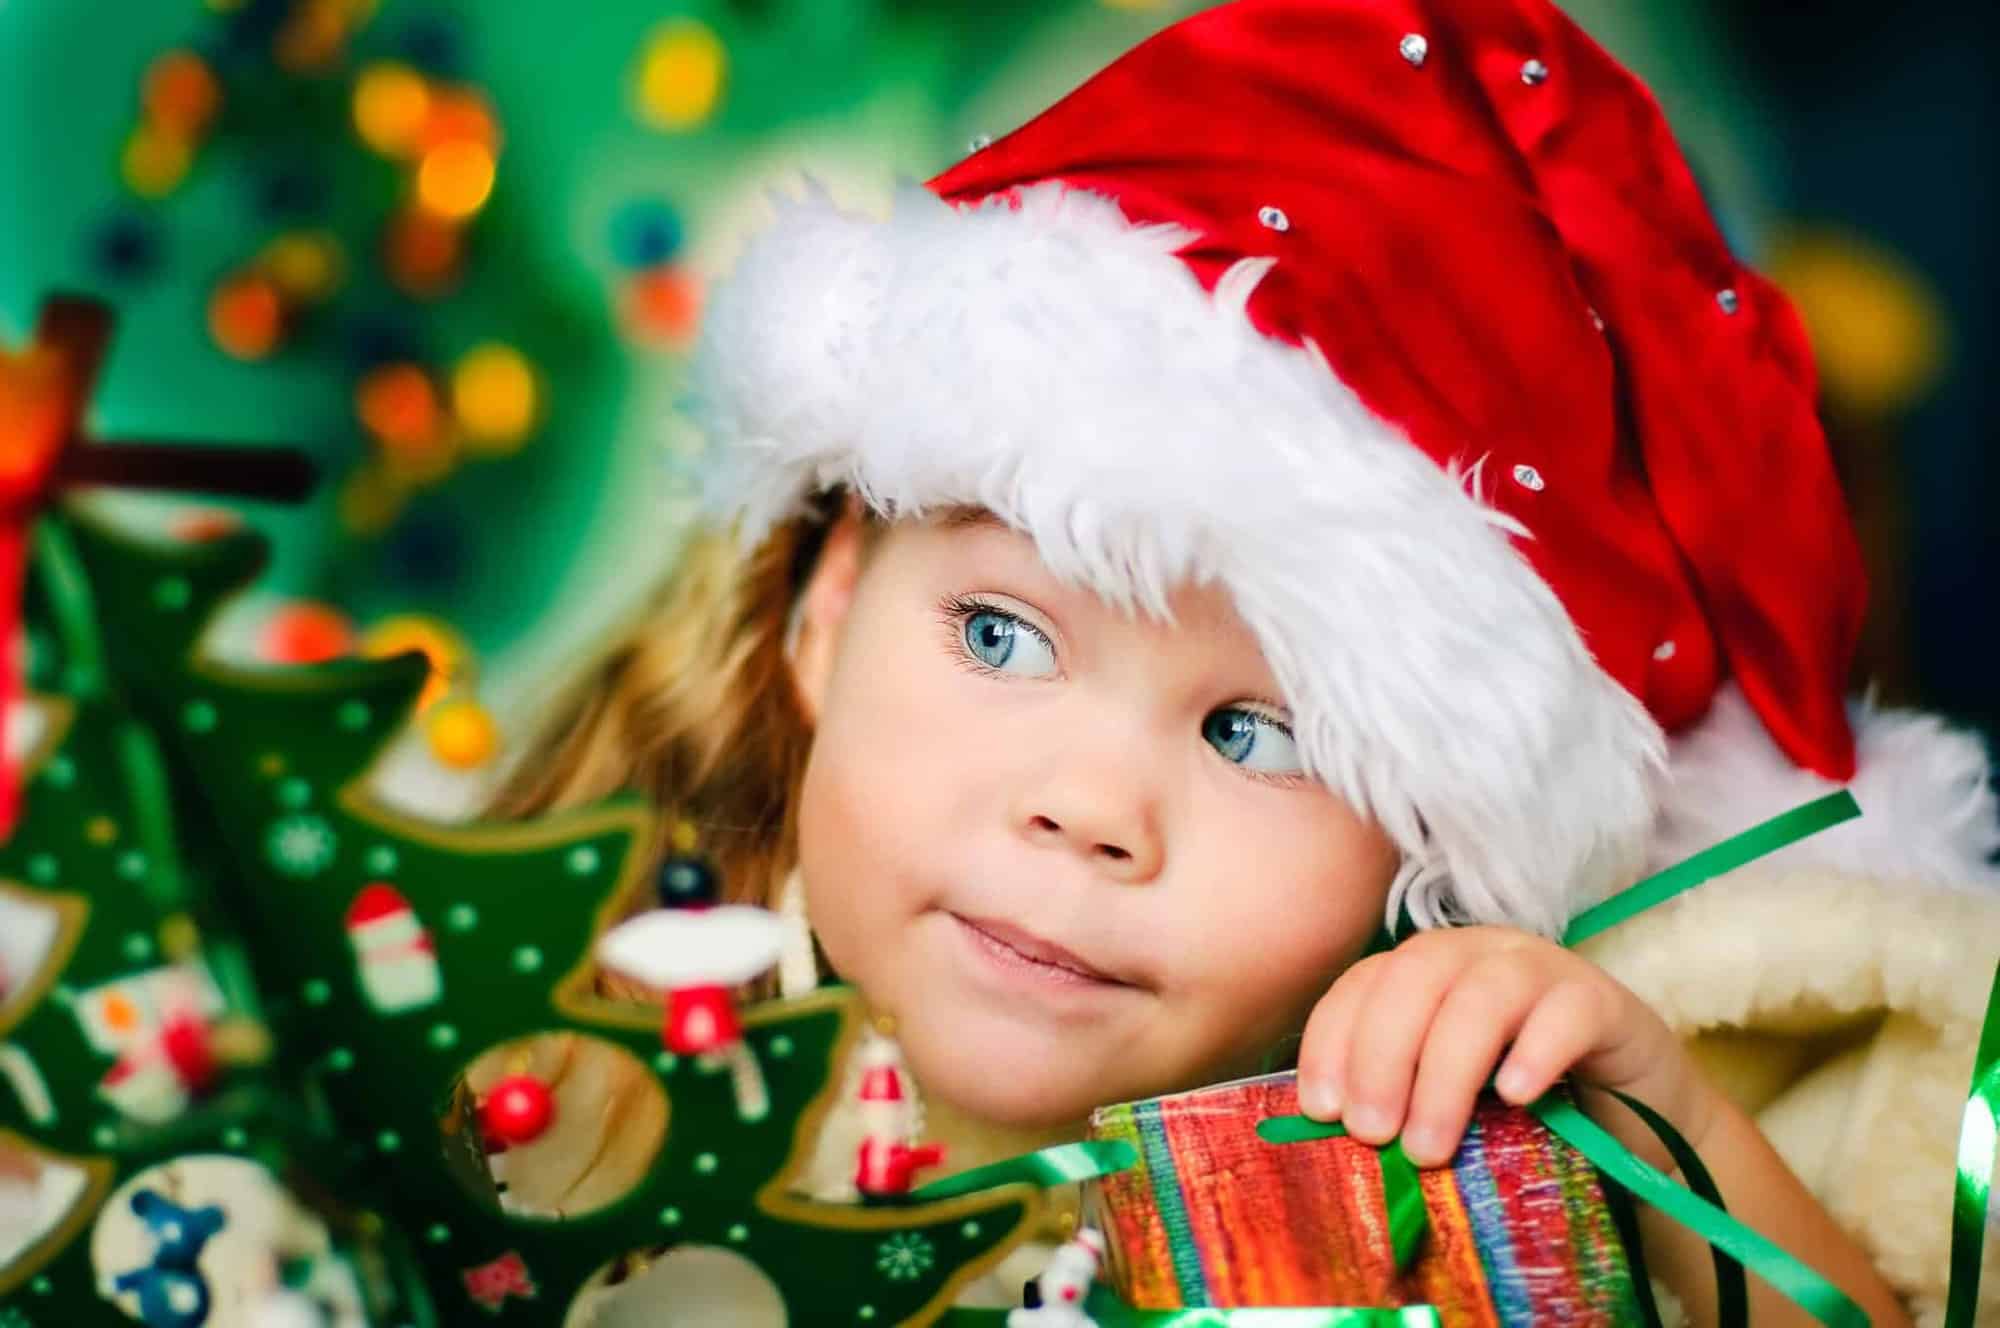 Little girl looking at a Christmas treeLittle girl looking at a Christmas tree